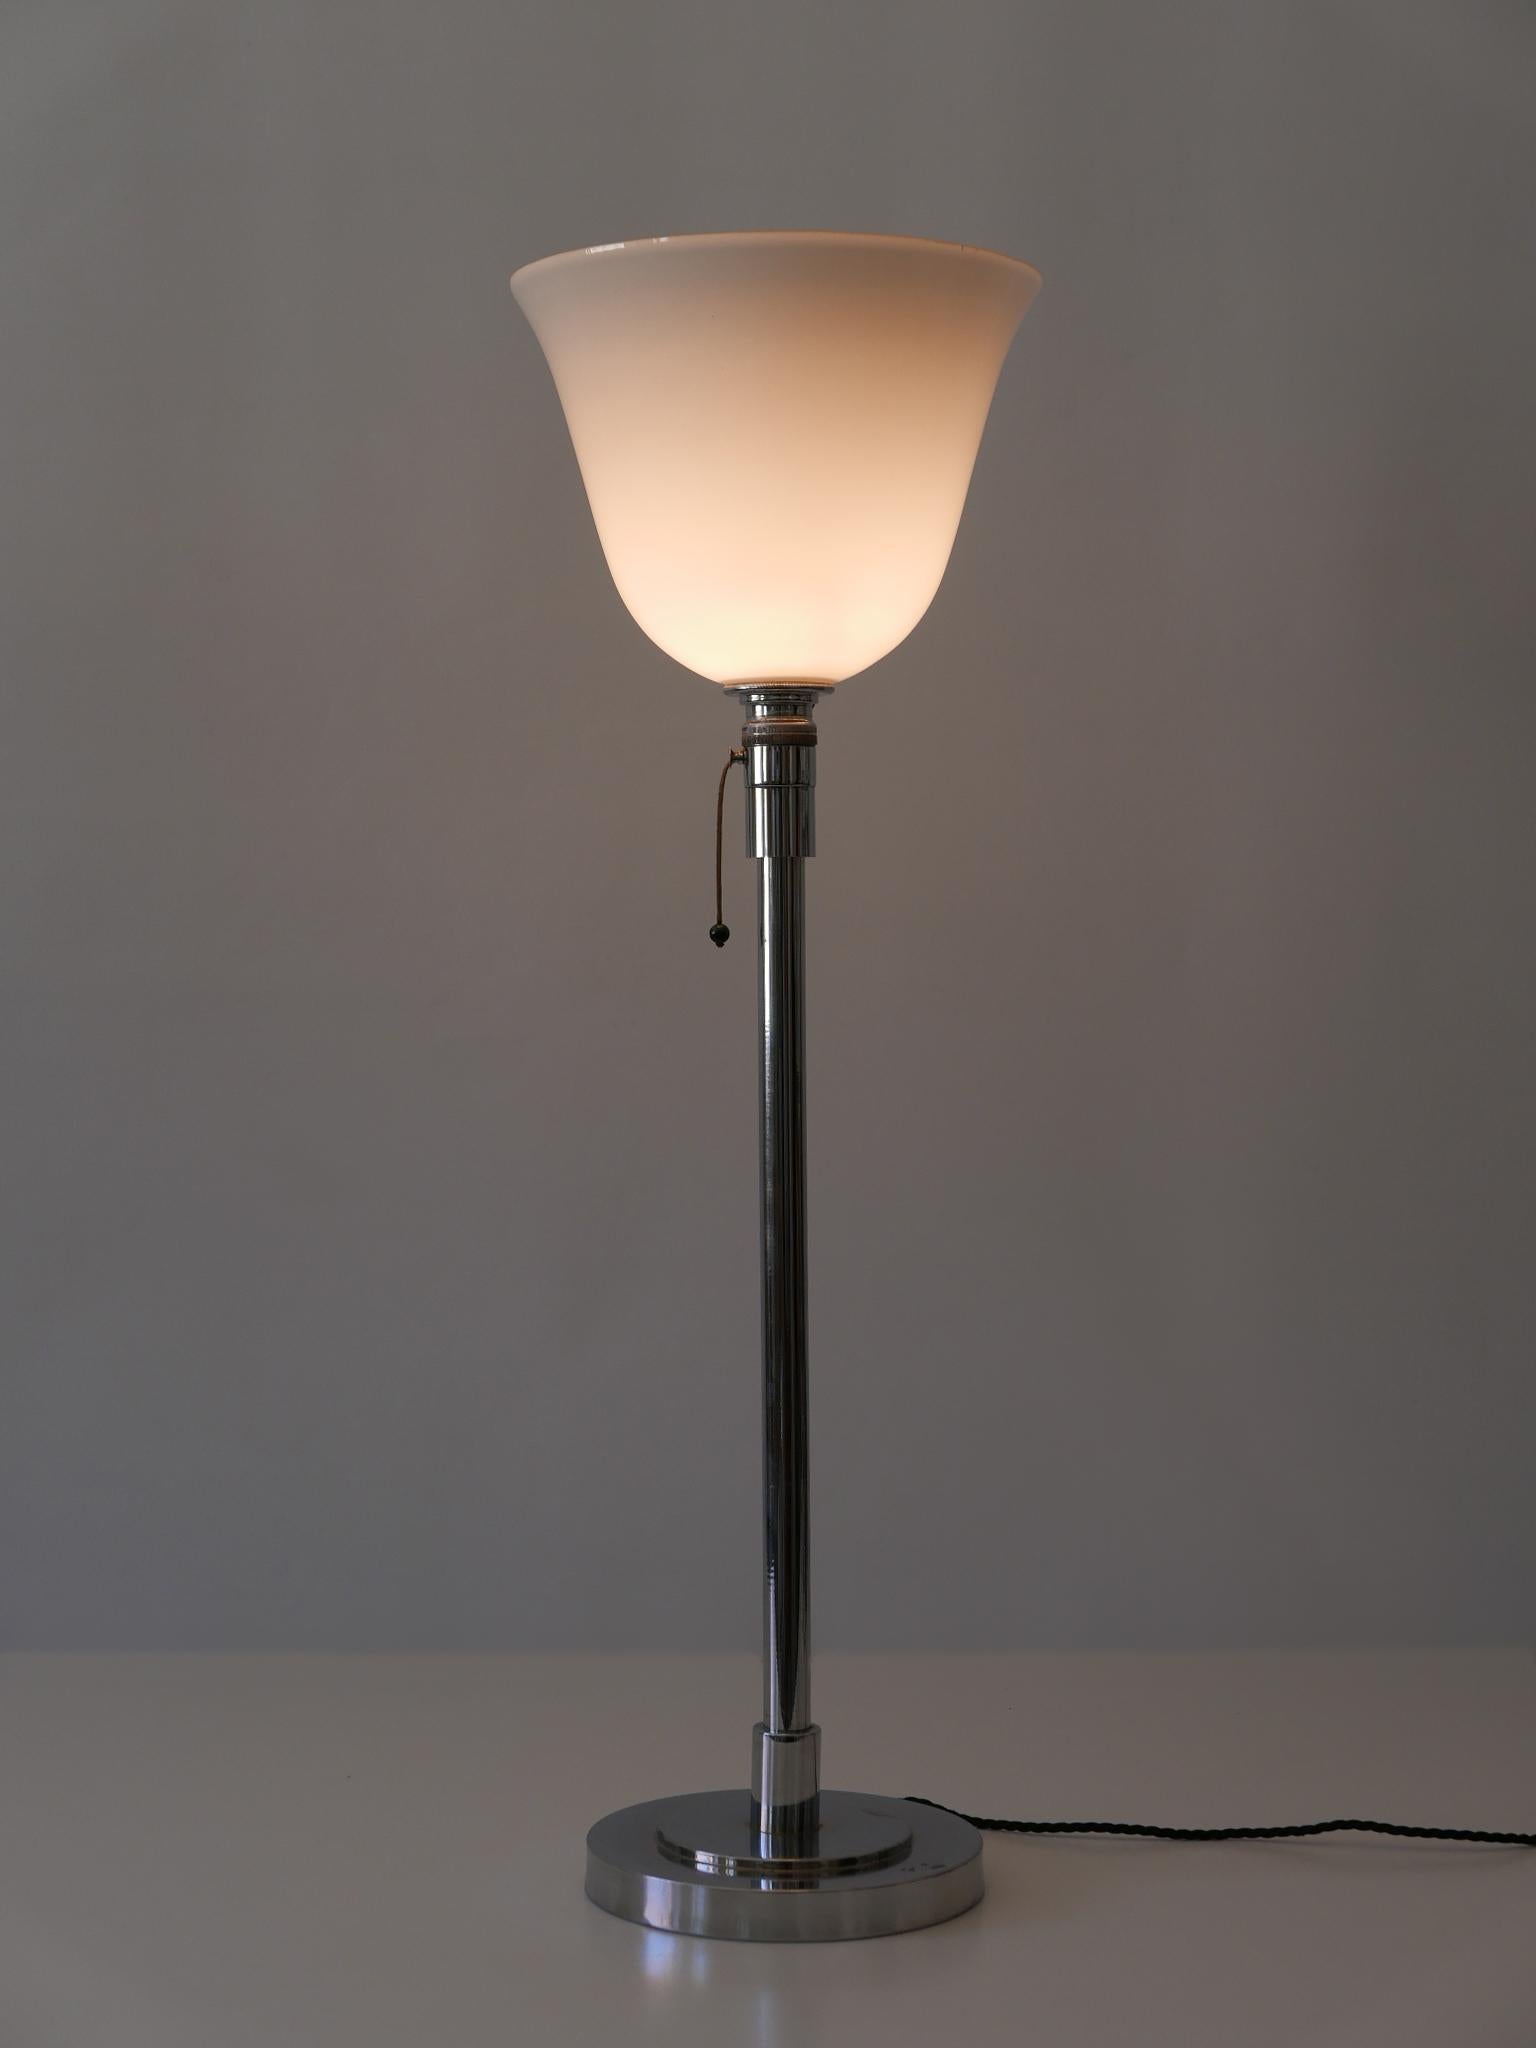 Elegant Art Deco Bauhaus Table Lamp or Floor Light by Mazda Paris, France, 1930s For Sale 3